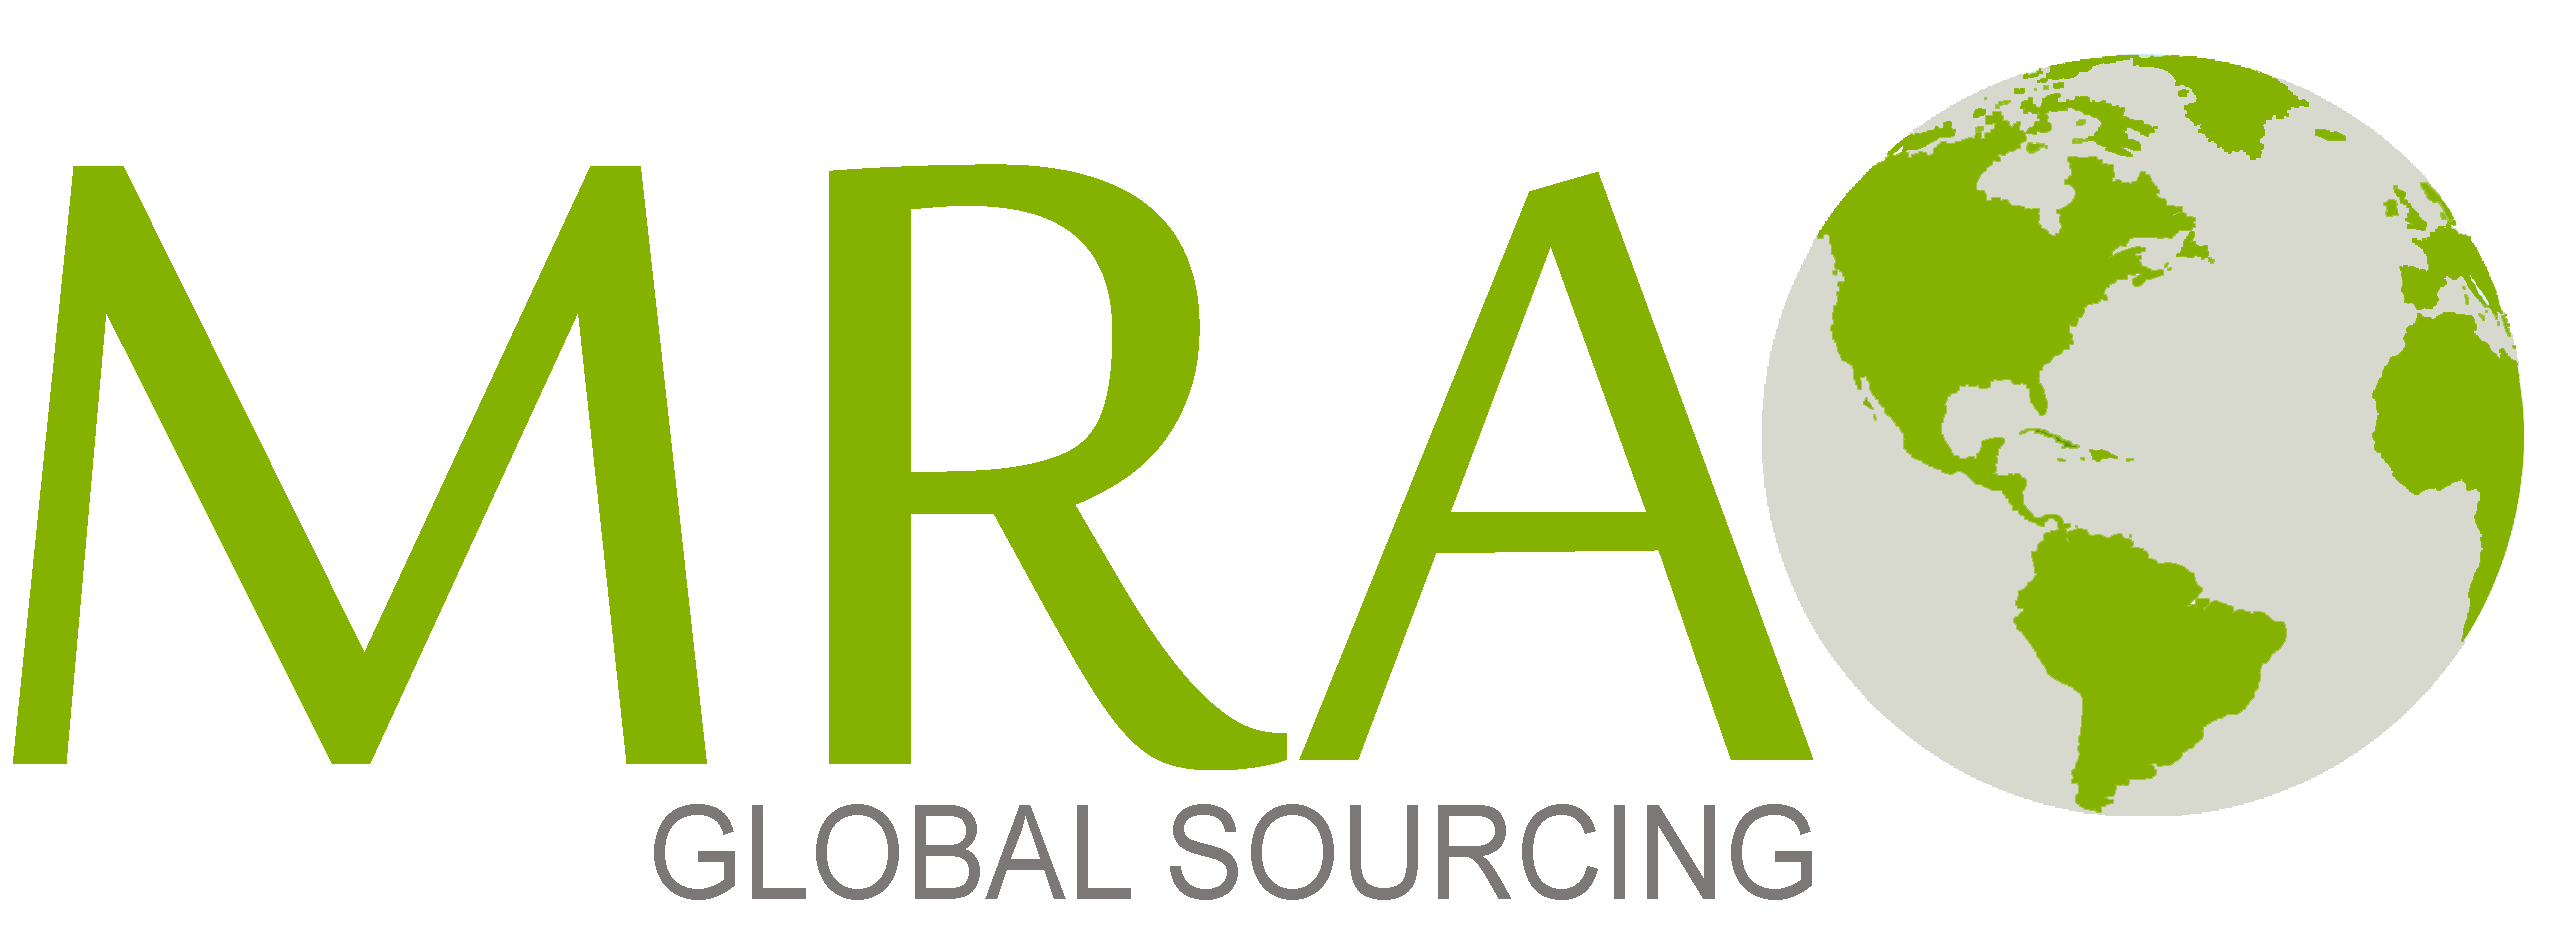 MRA Global Sourcing – Client Logos, Procurement